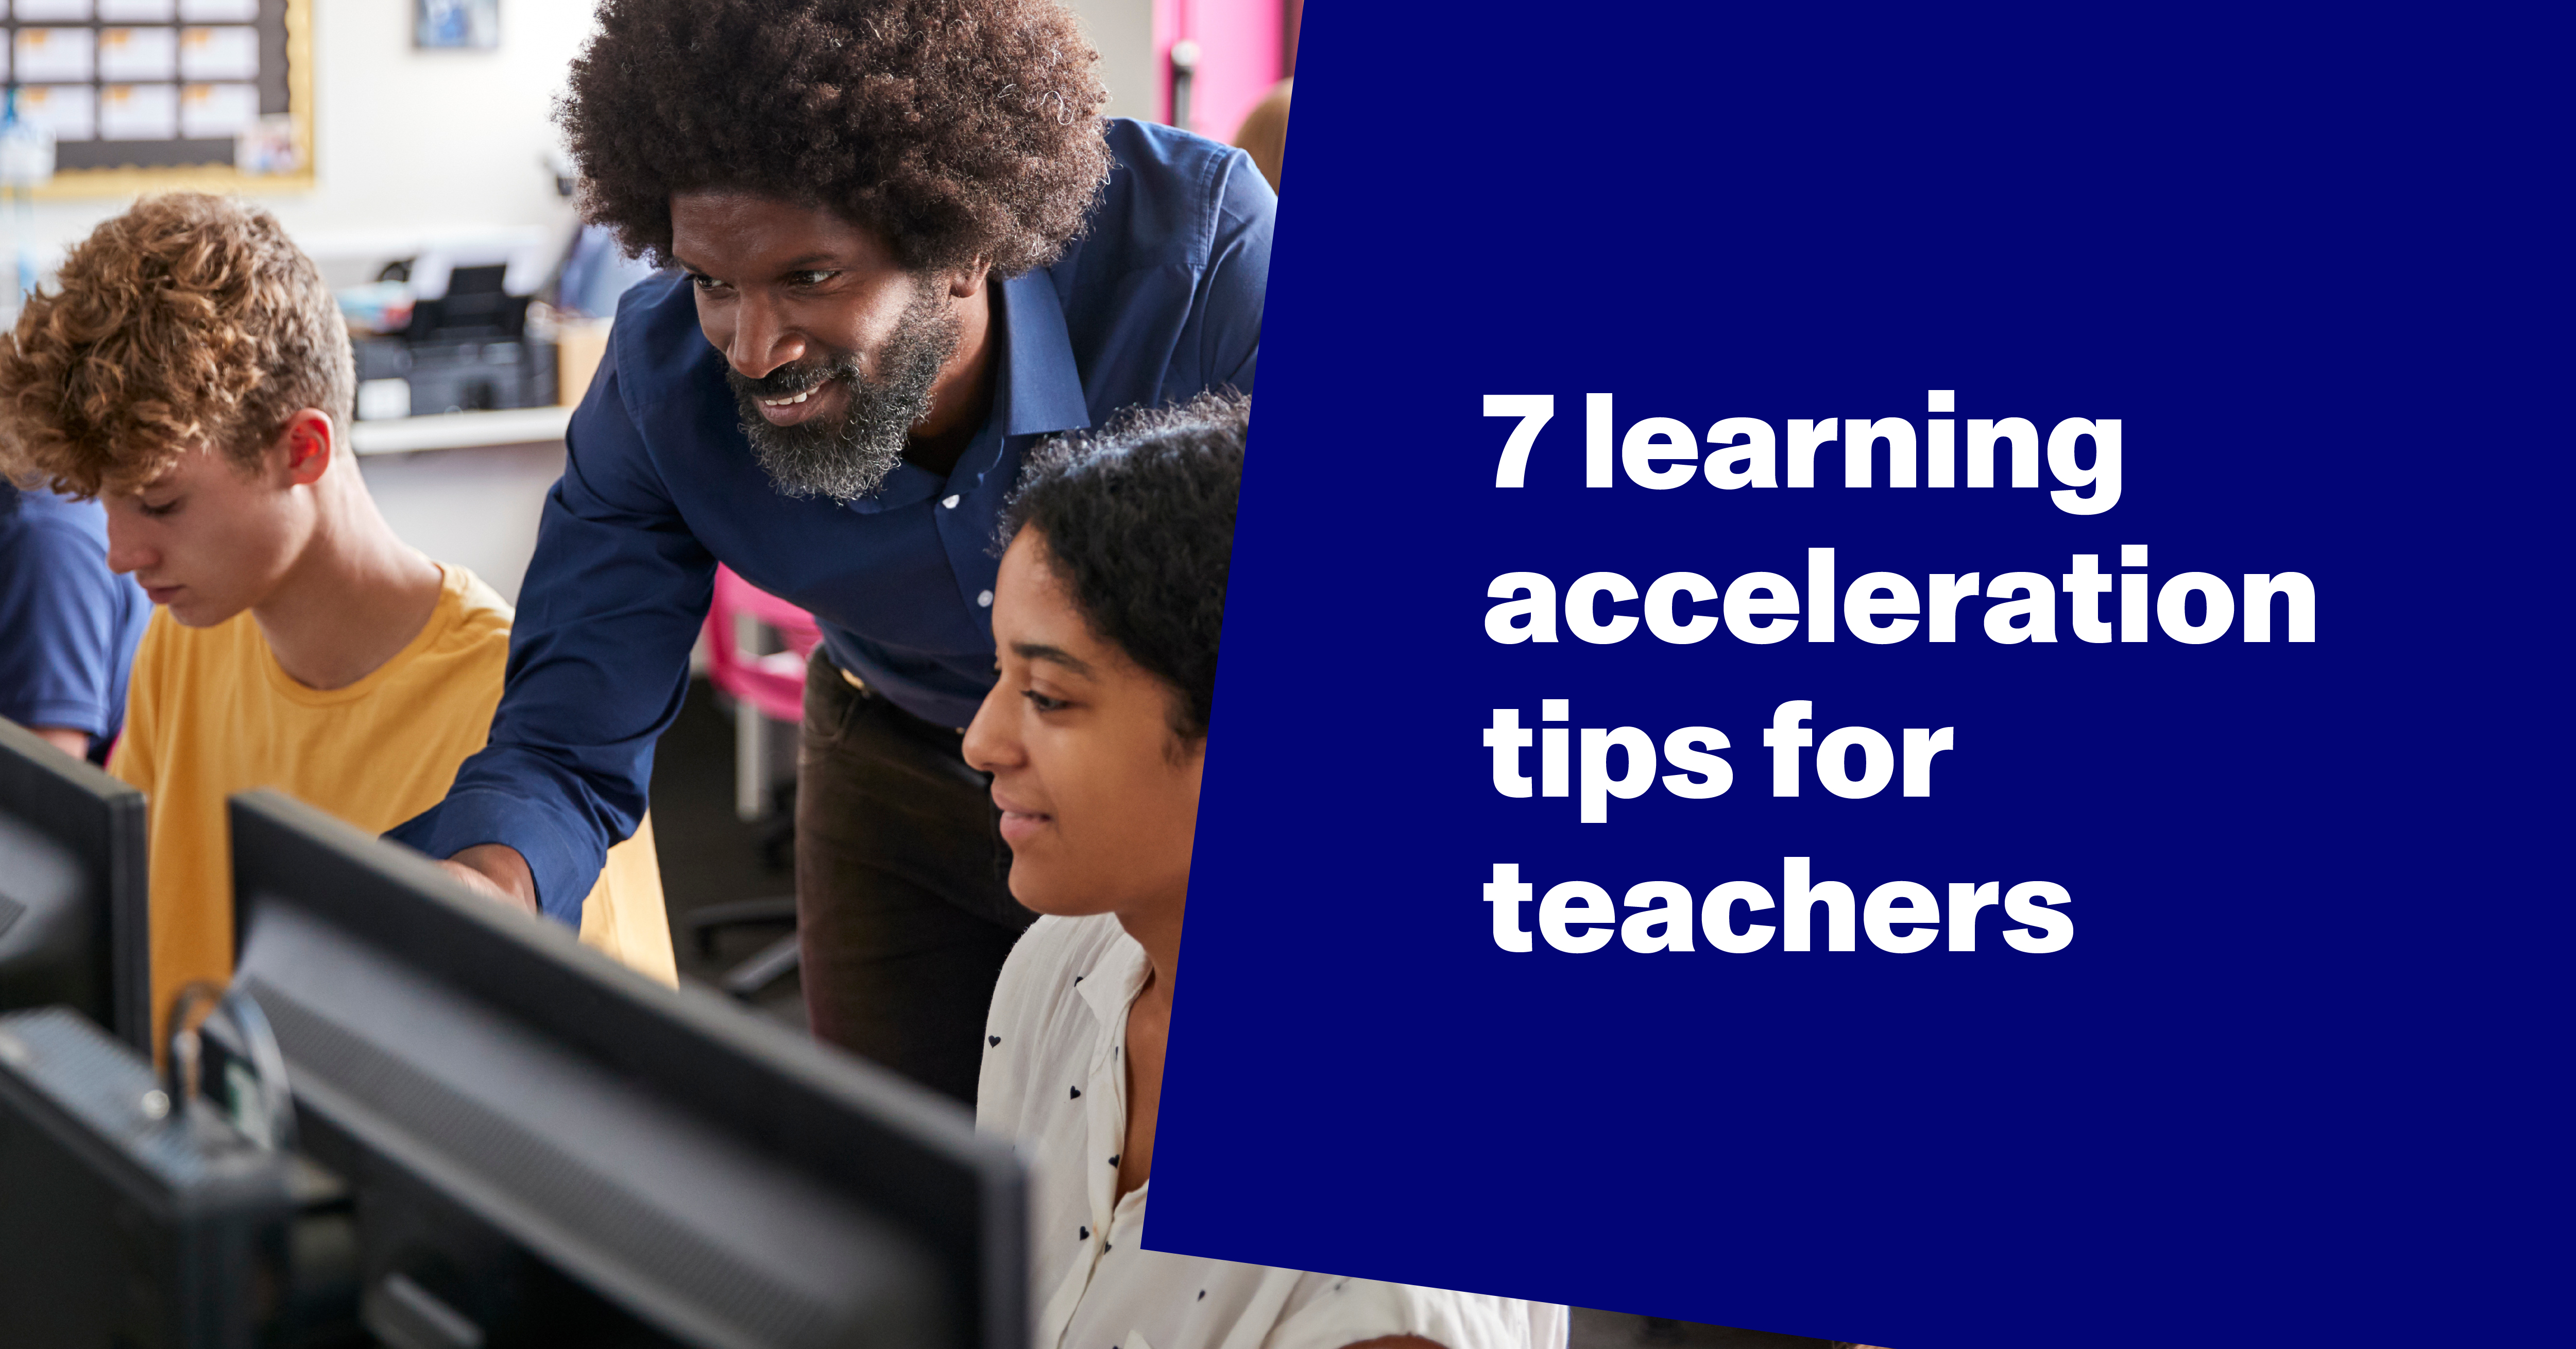 7 learning acceleration tips for teachers